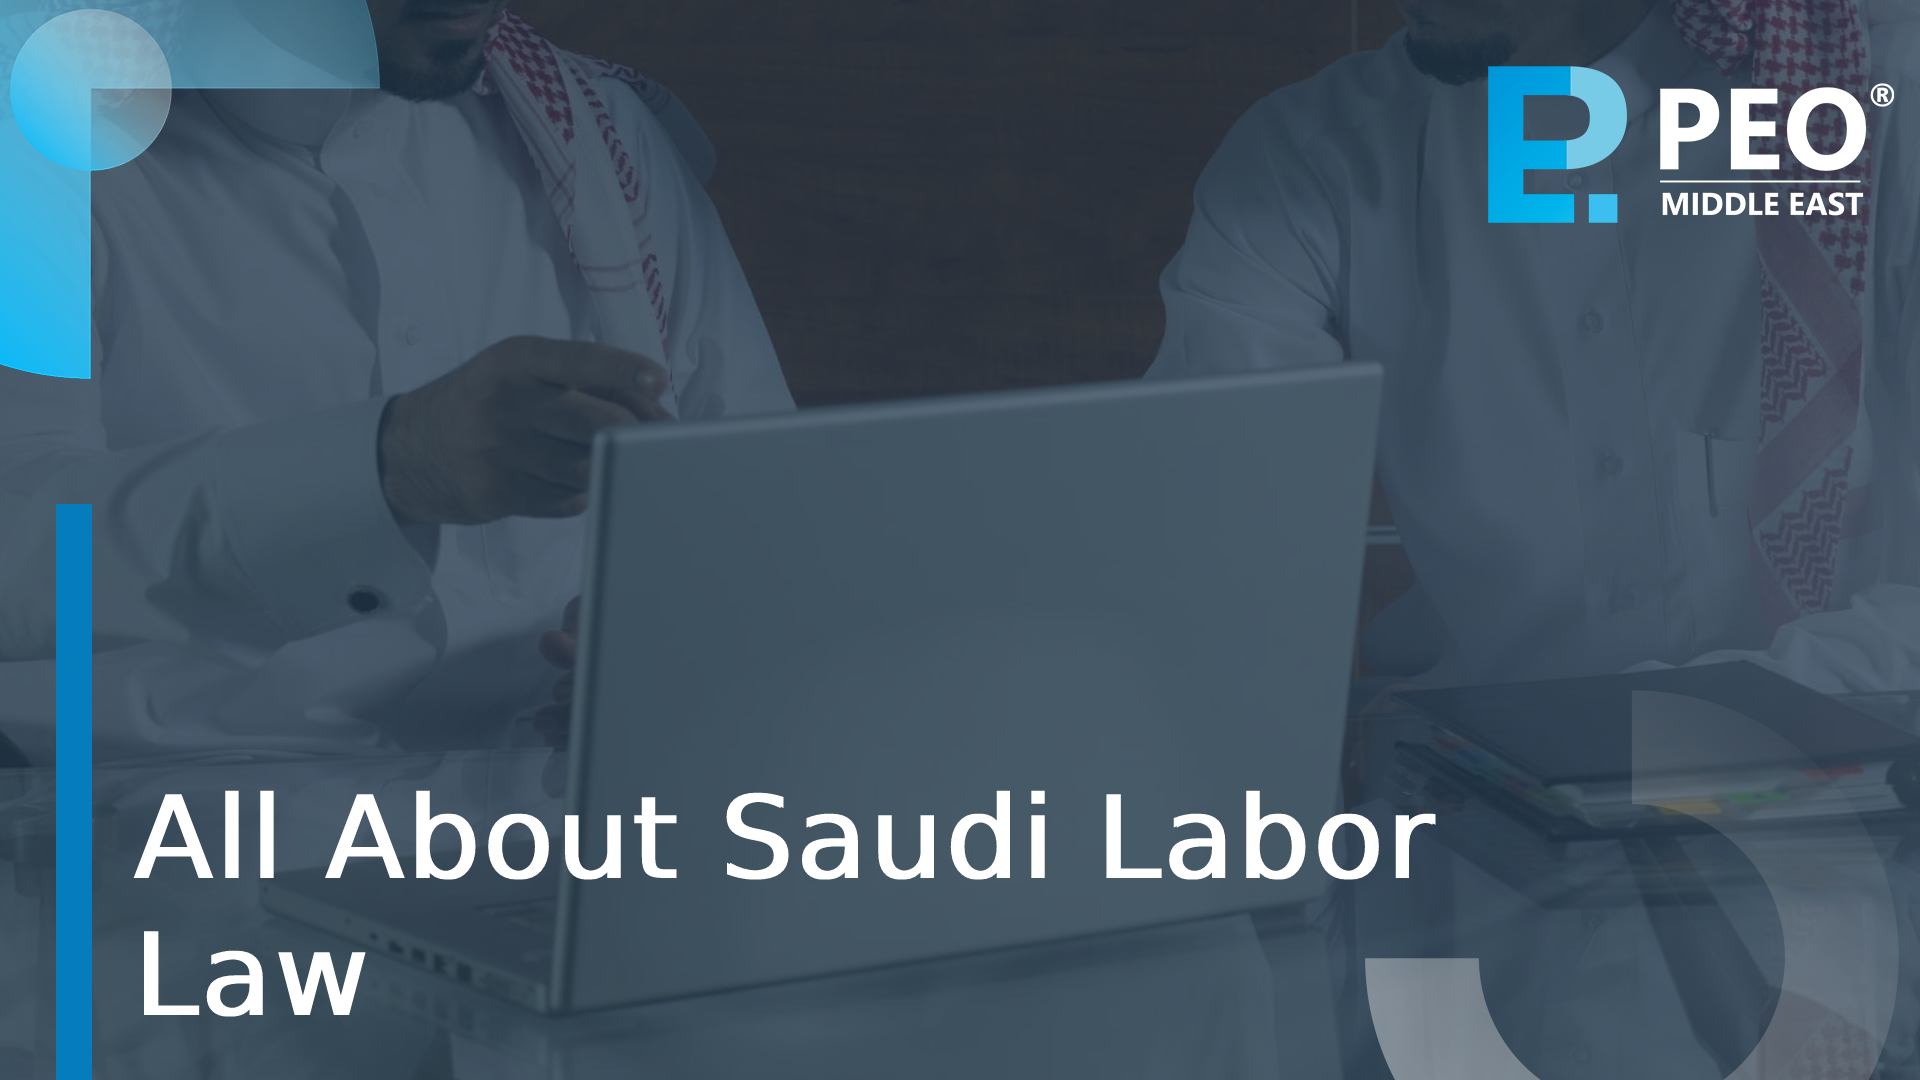 Saudi labor law